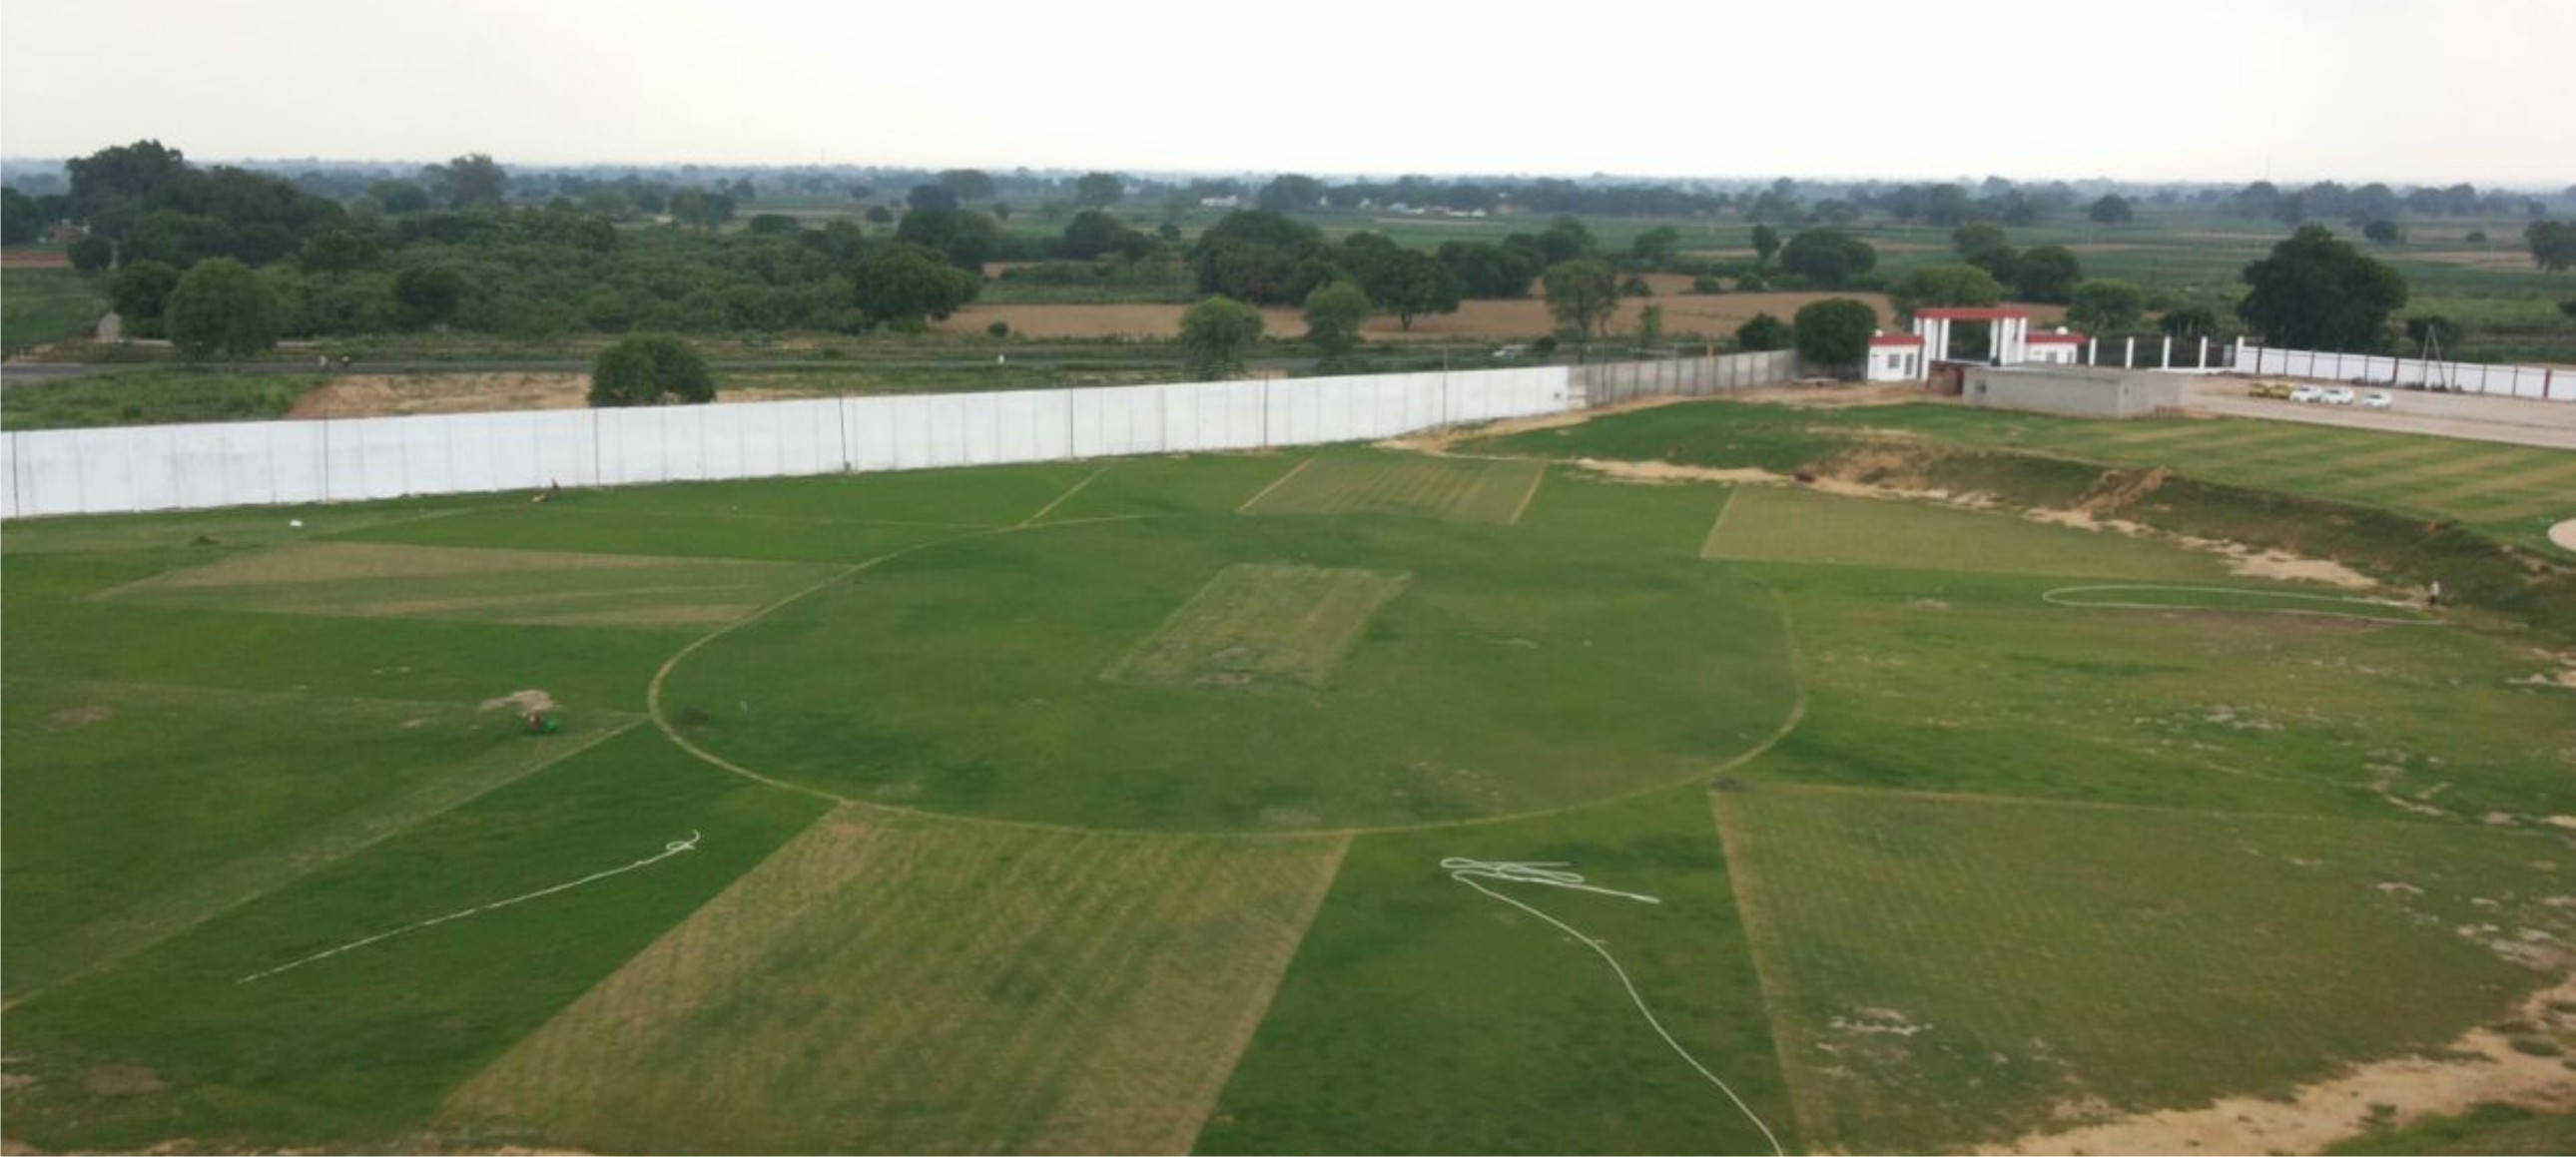 ae cricket ground construction